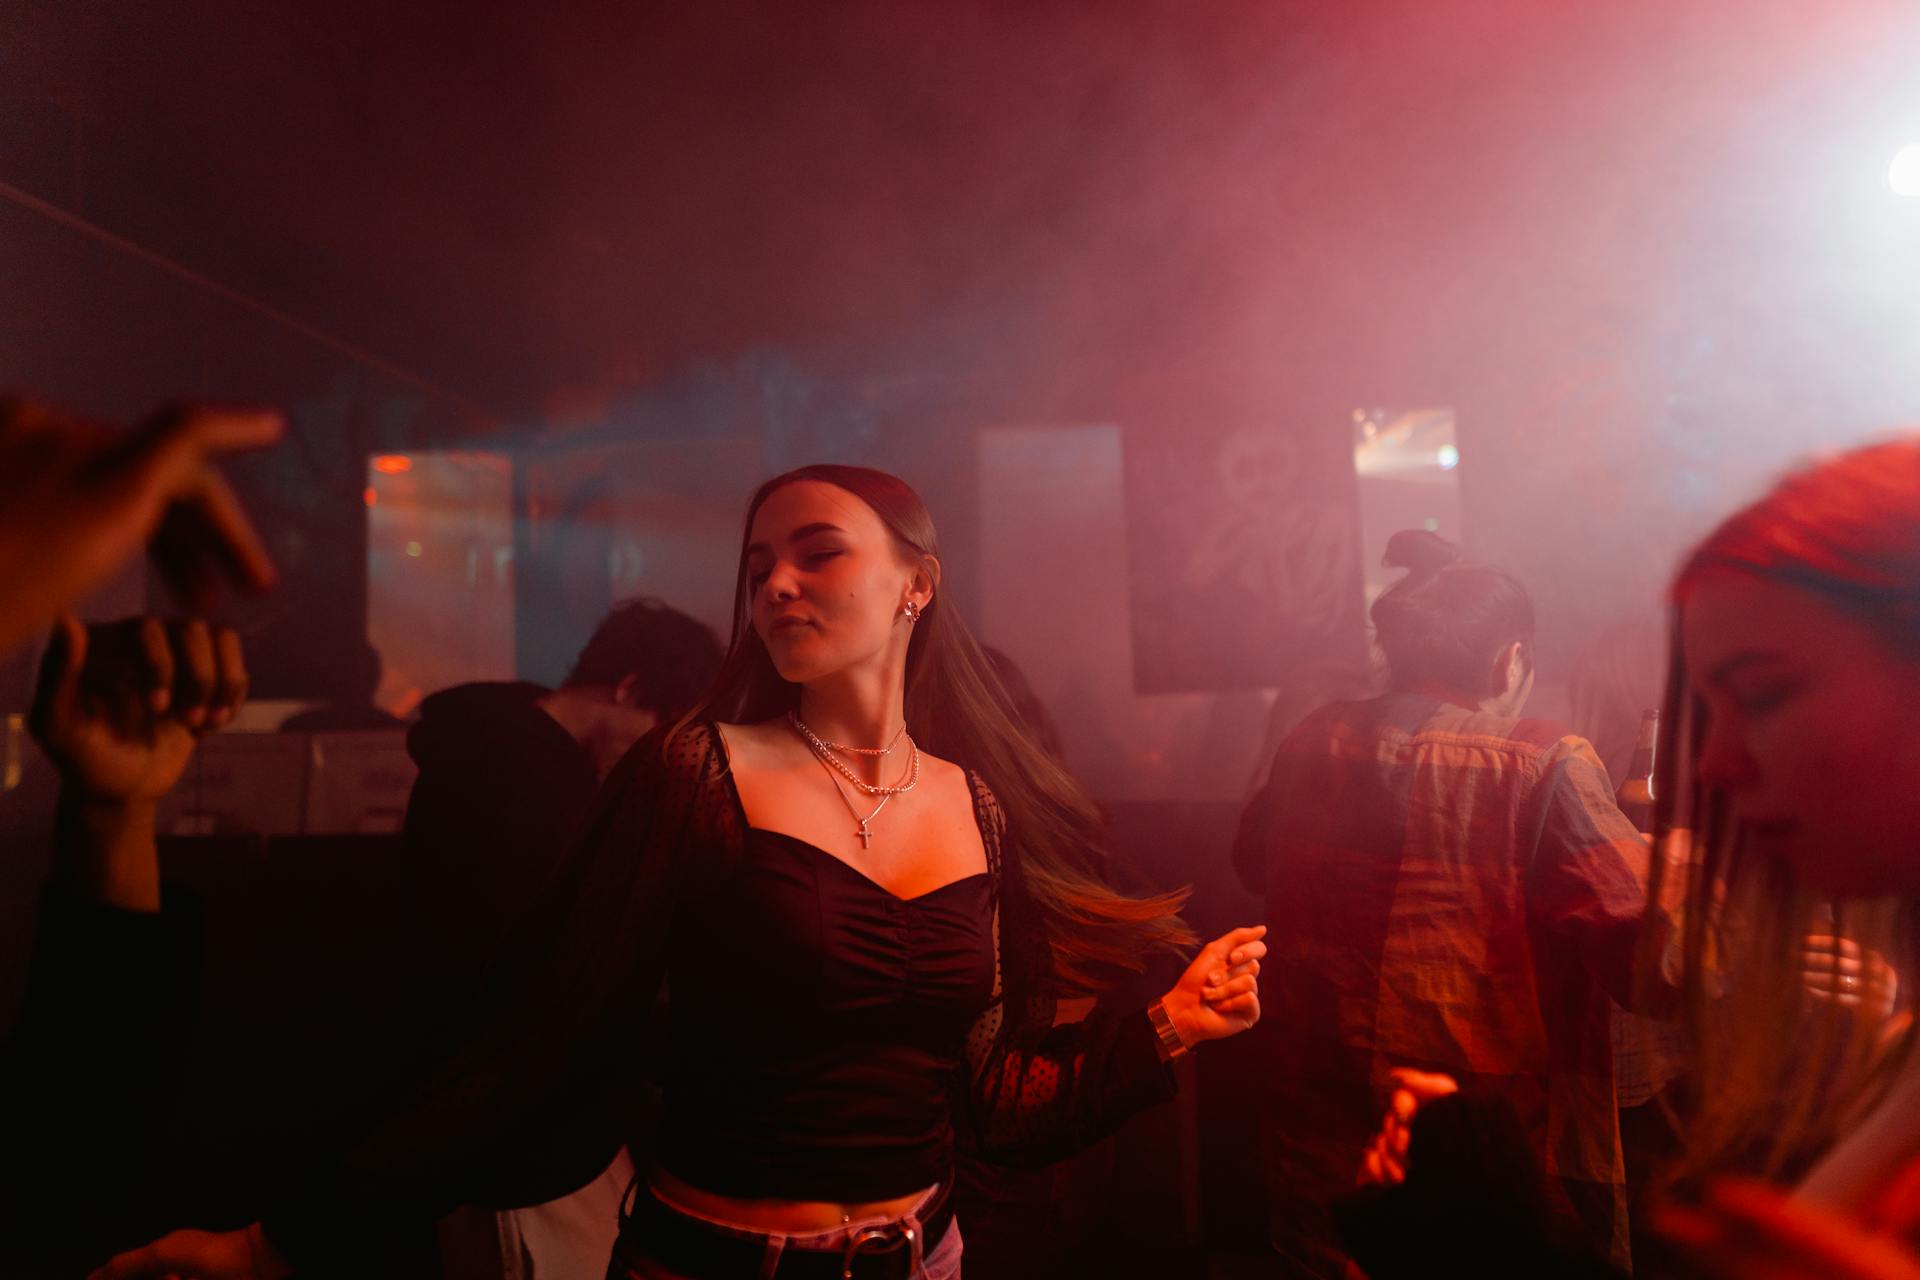 A woman dancing in a club | Source: Pexels